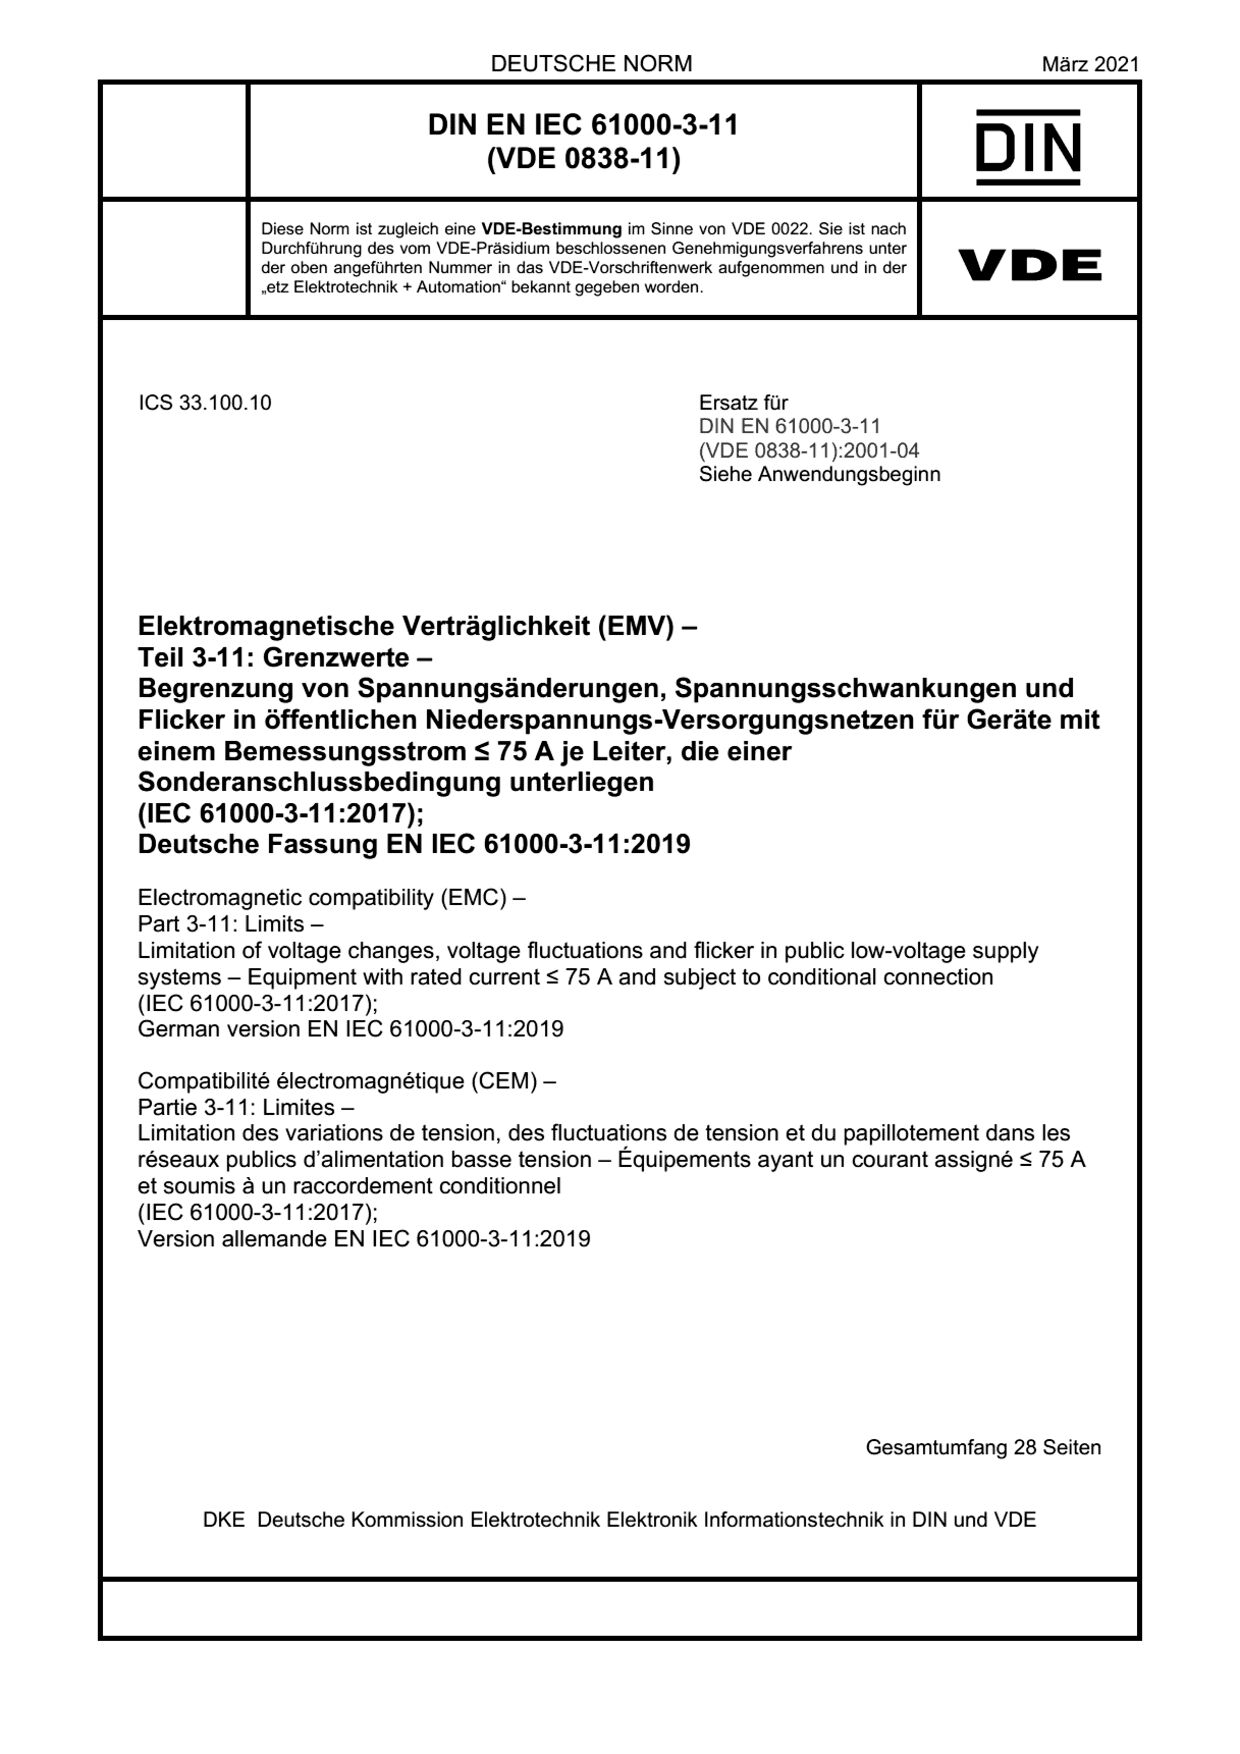 DIN EN IEC 61000-3-11:2021封面图